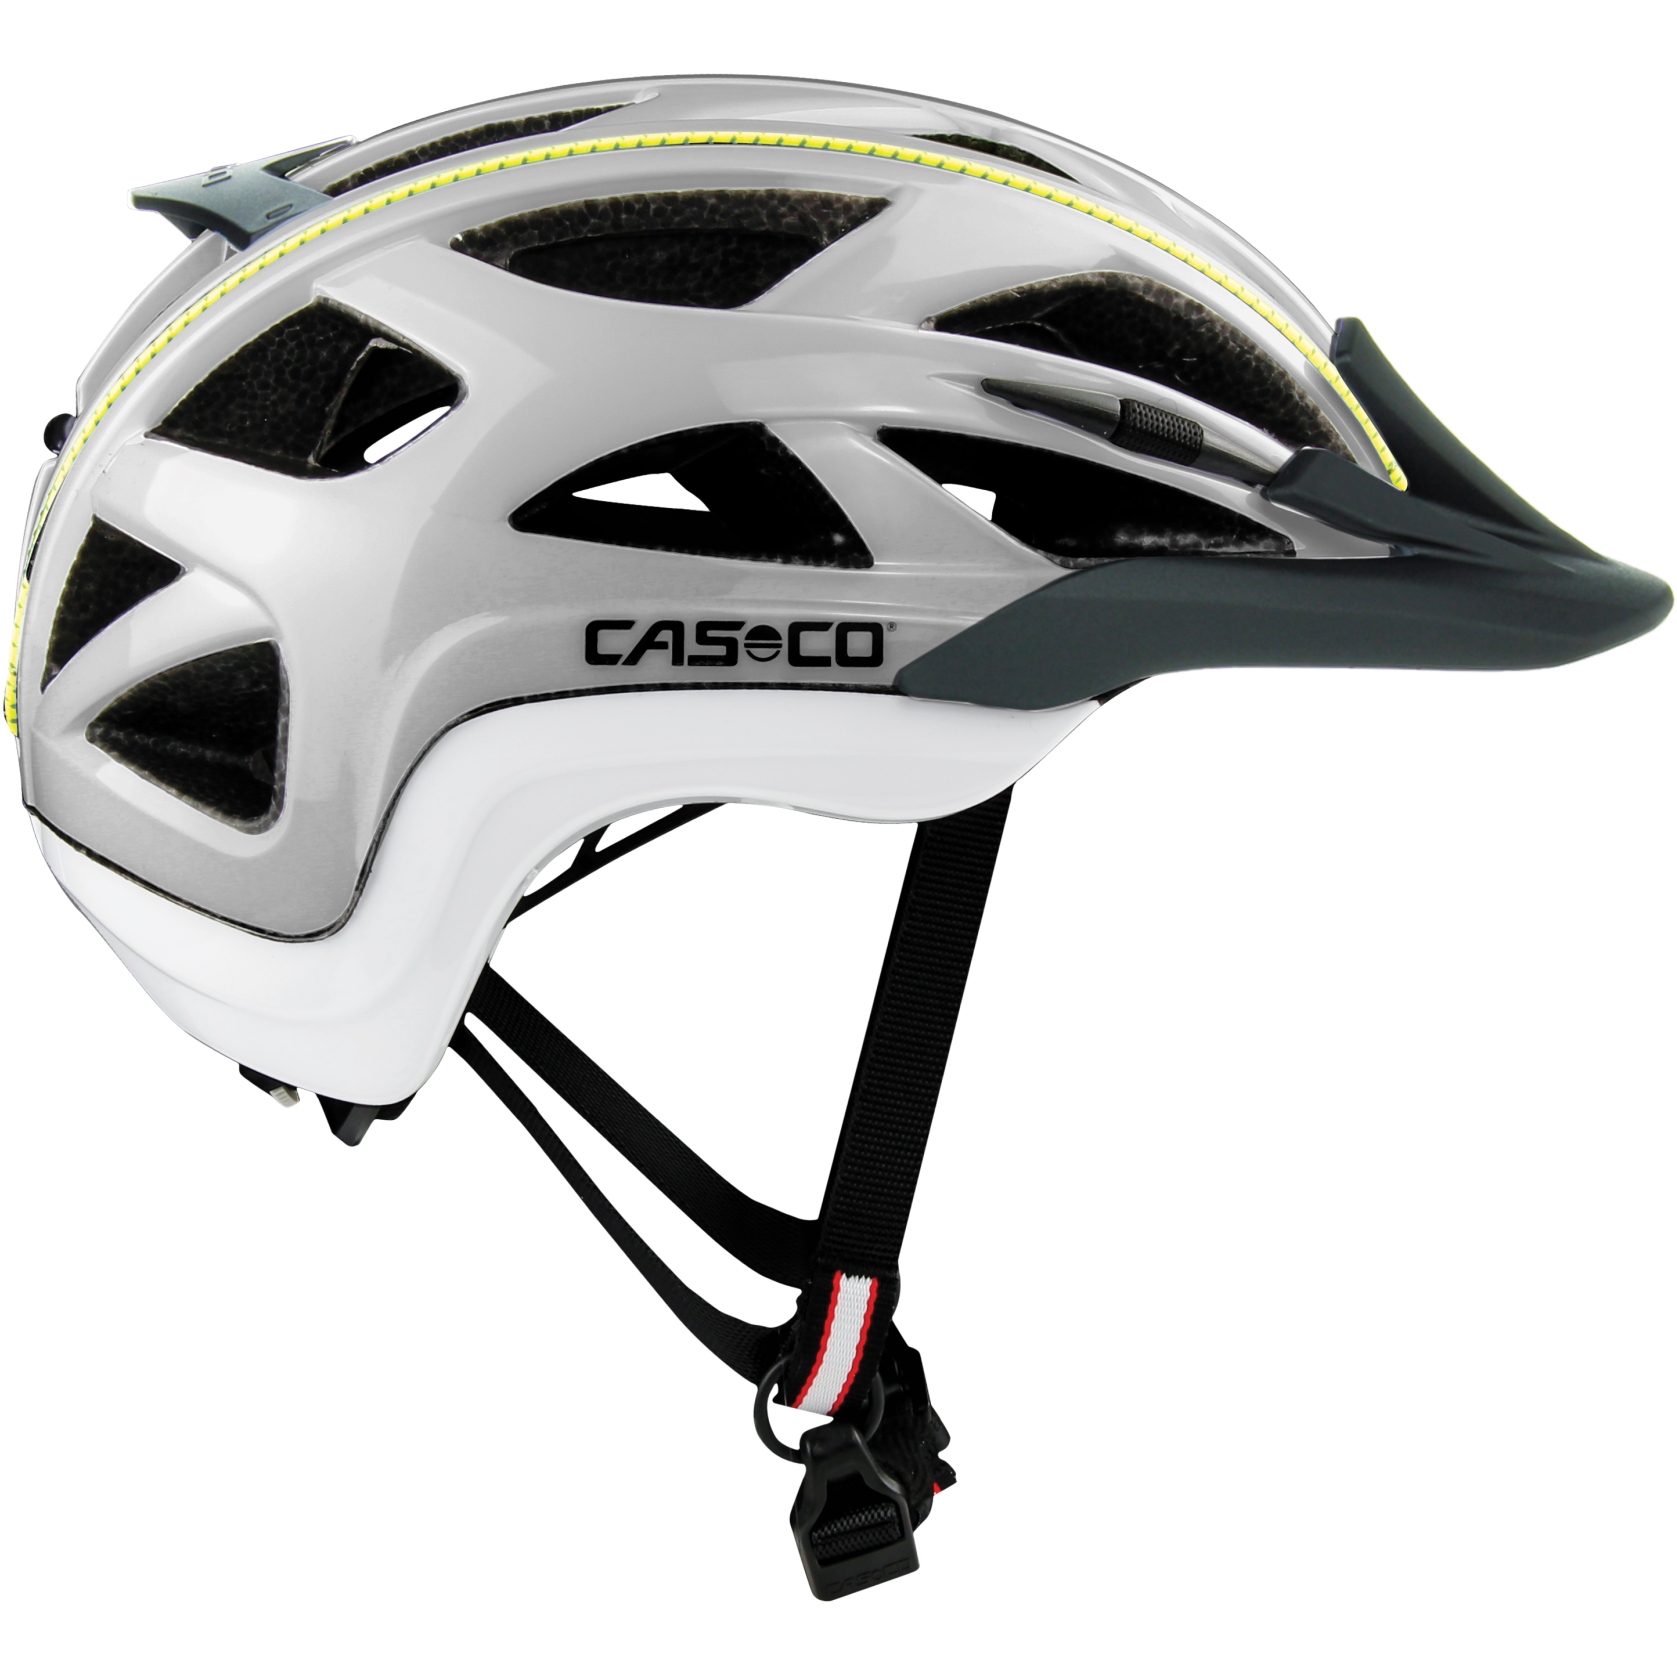 Productfoto van Casco Activ 2 Helm - sand white neon